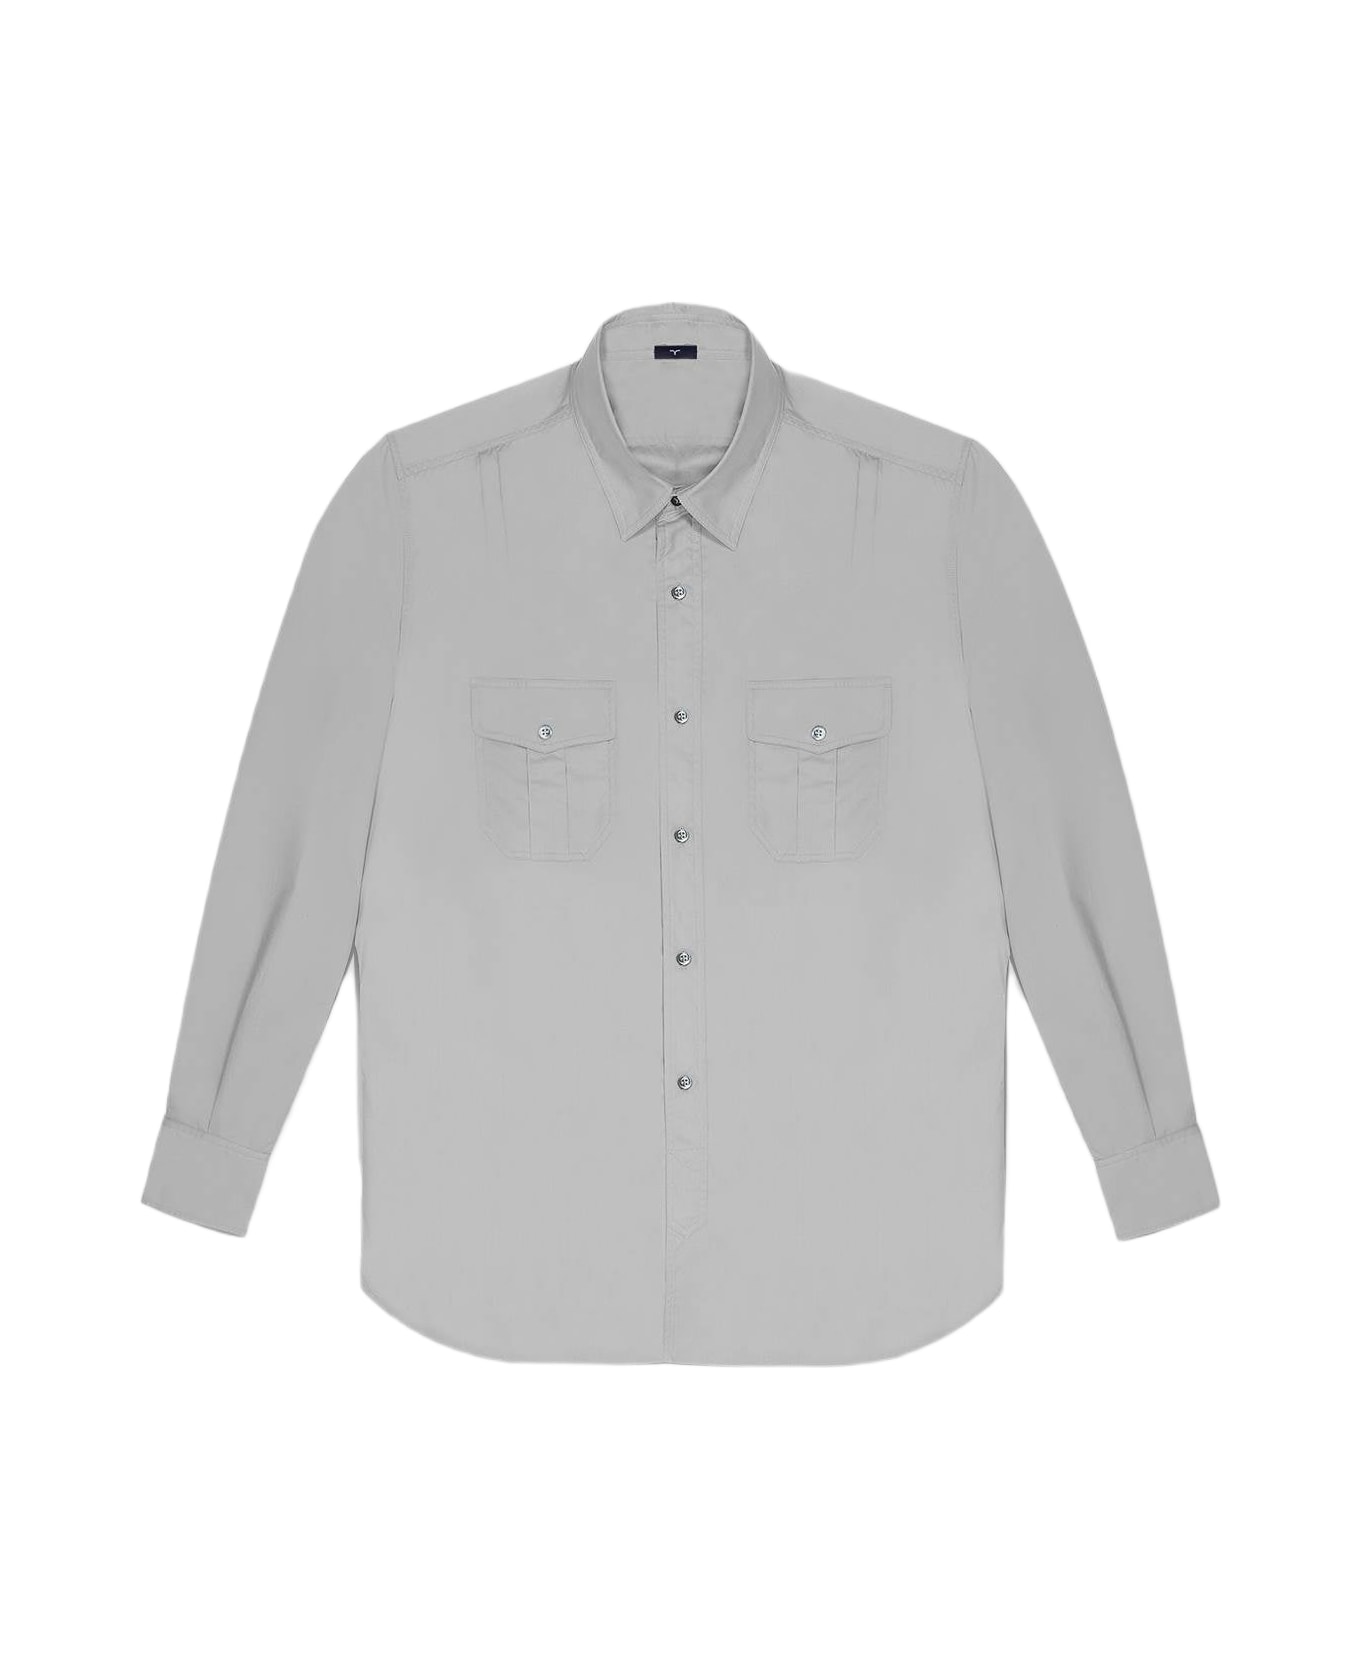 Larusmiani Military Cotton Shirt Shirt - LightGray シャツ